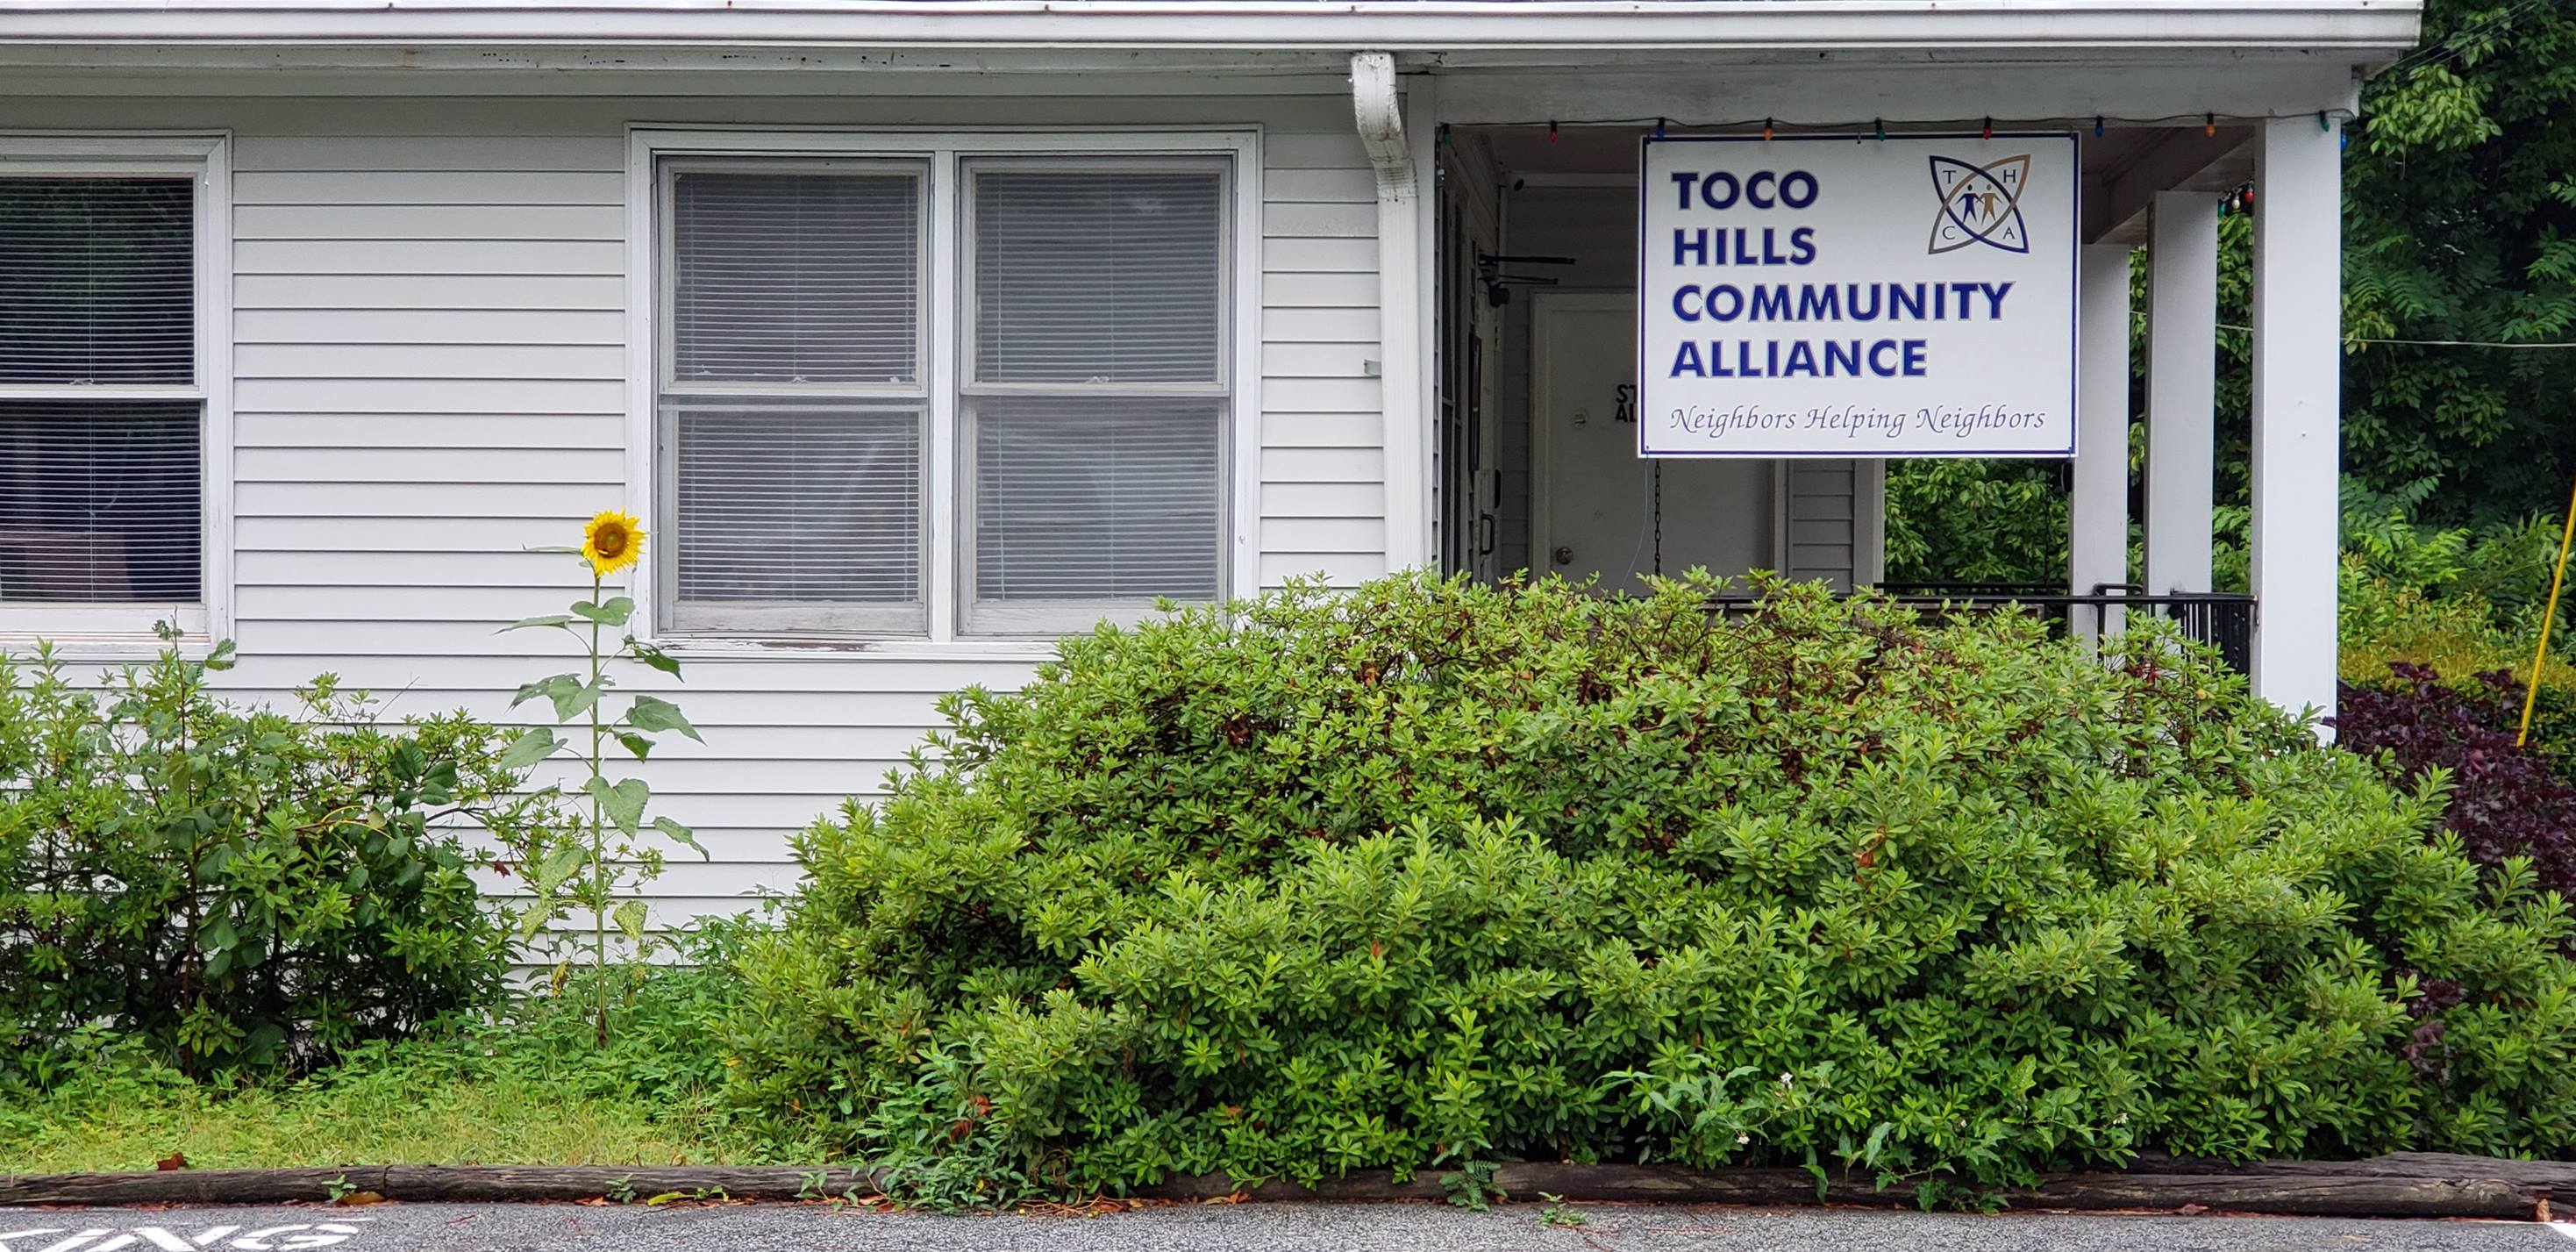 Toco Hills Community Alliance